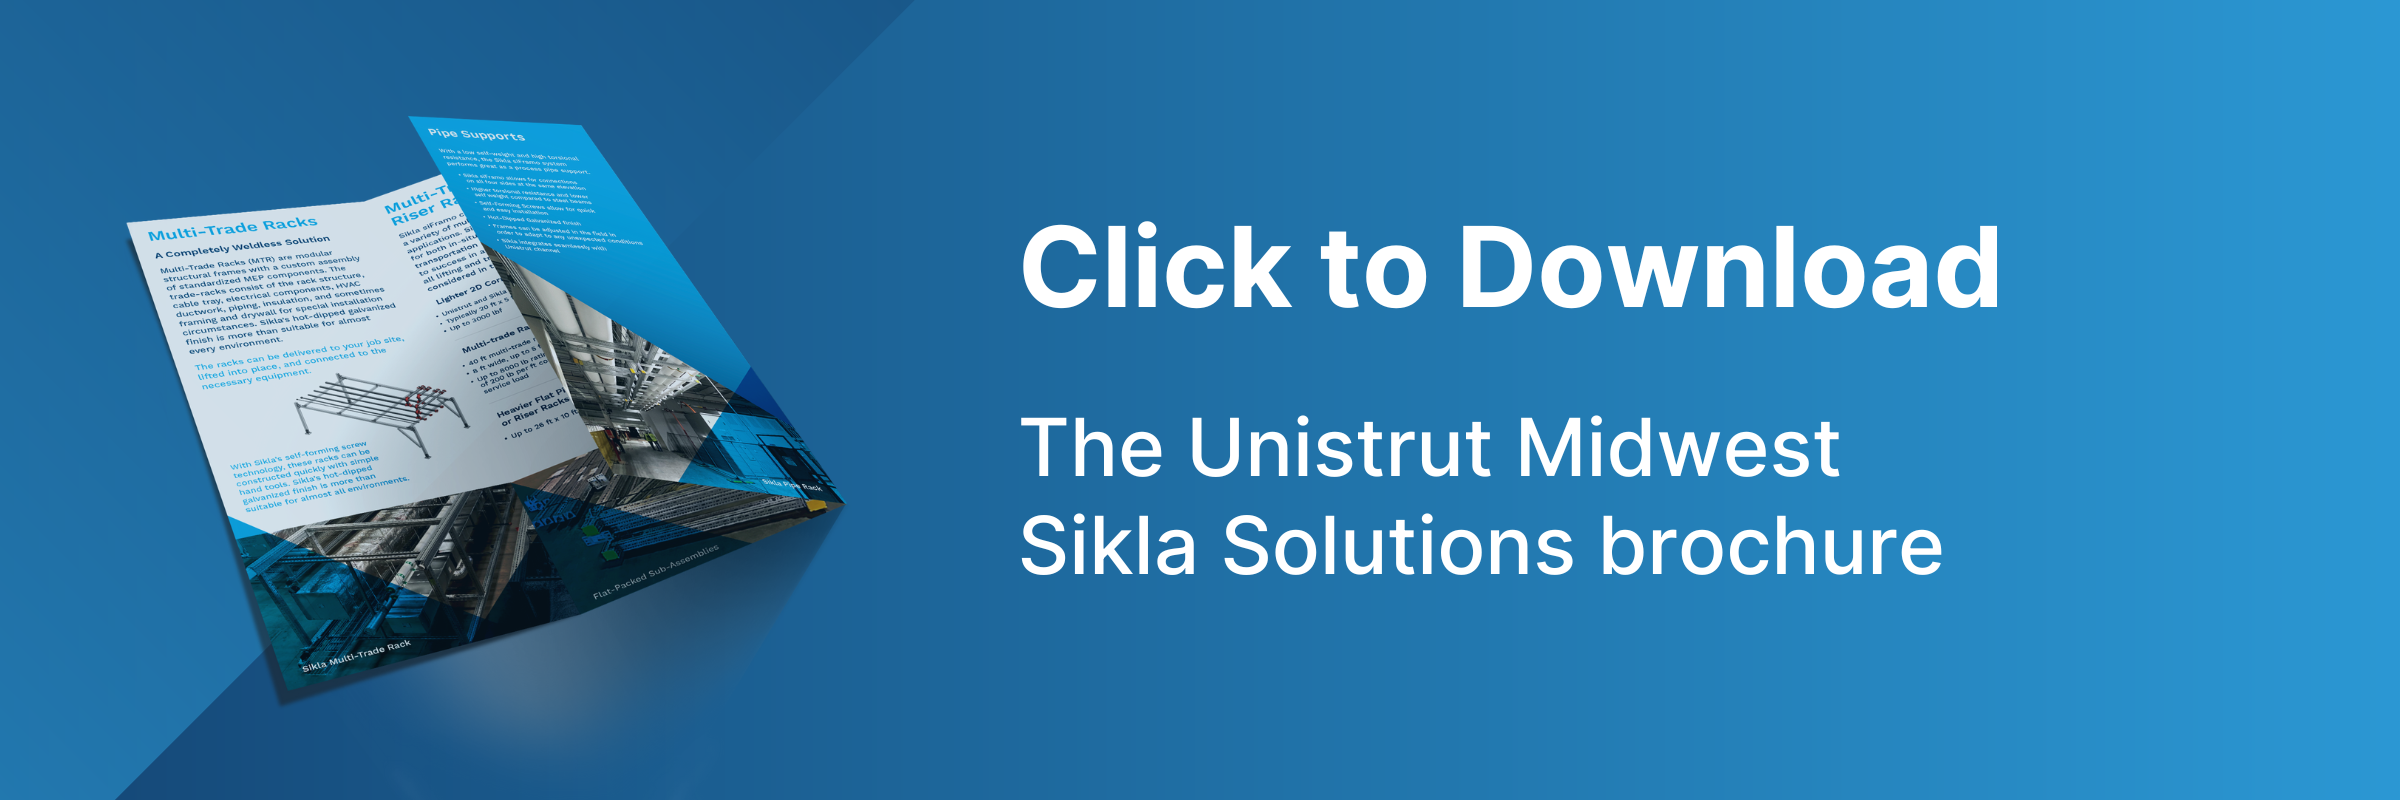 Unistrut Midwest Sikla Solutions brochure